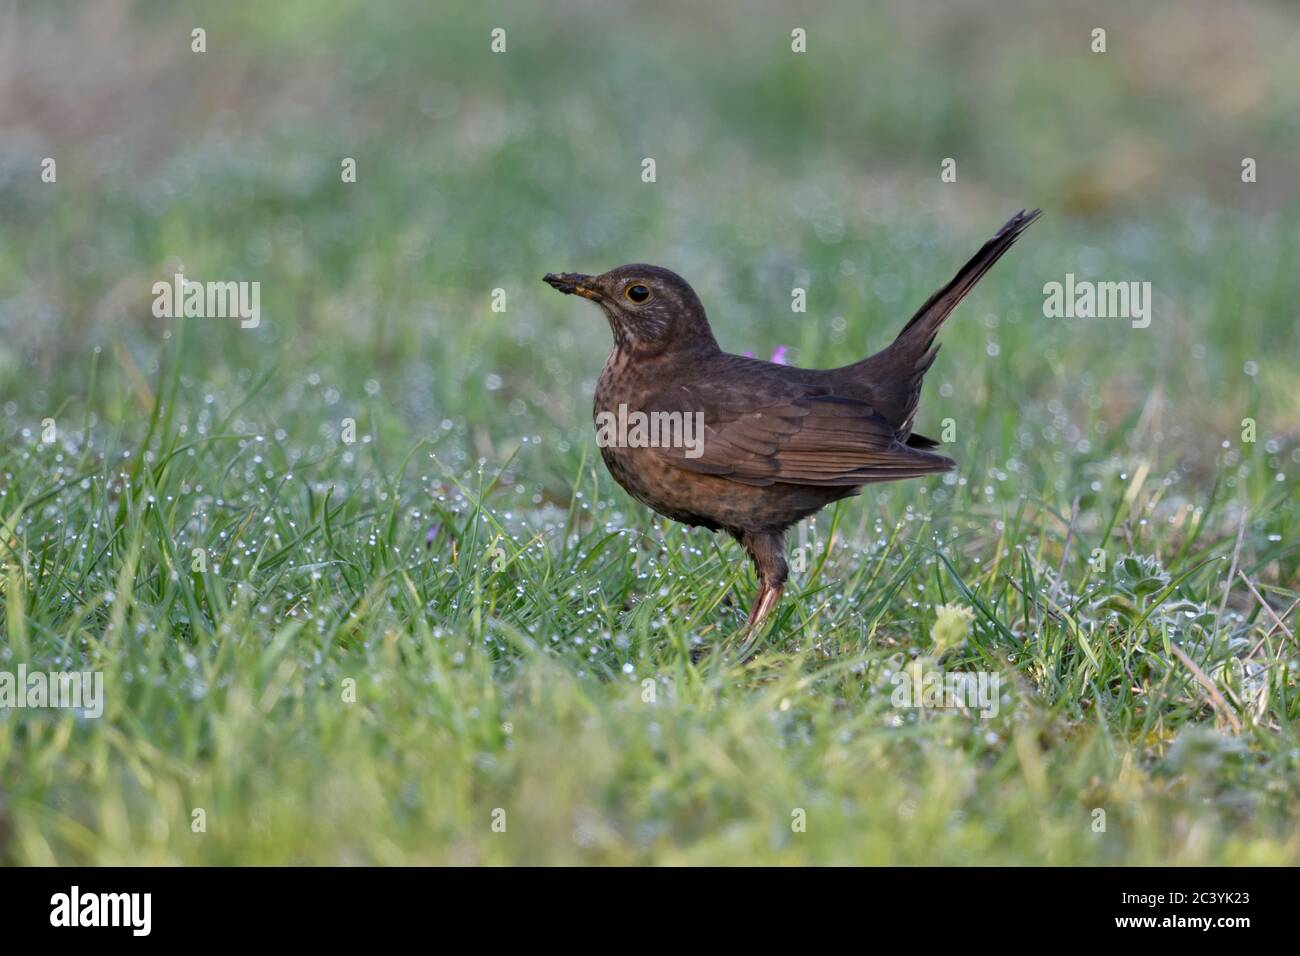 Common Blackbird / Amsel ( Turdus merula ), brown female, typical garden bird, sitting in grass, on the ground, in attentive  pose, side view, wildlif Stock Photo